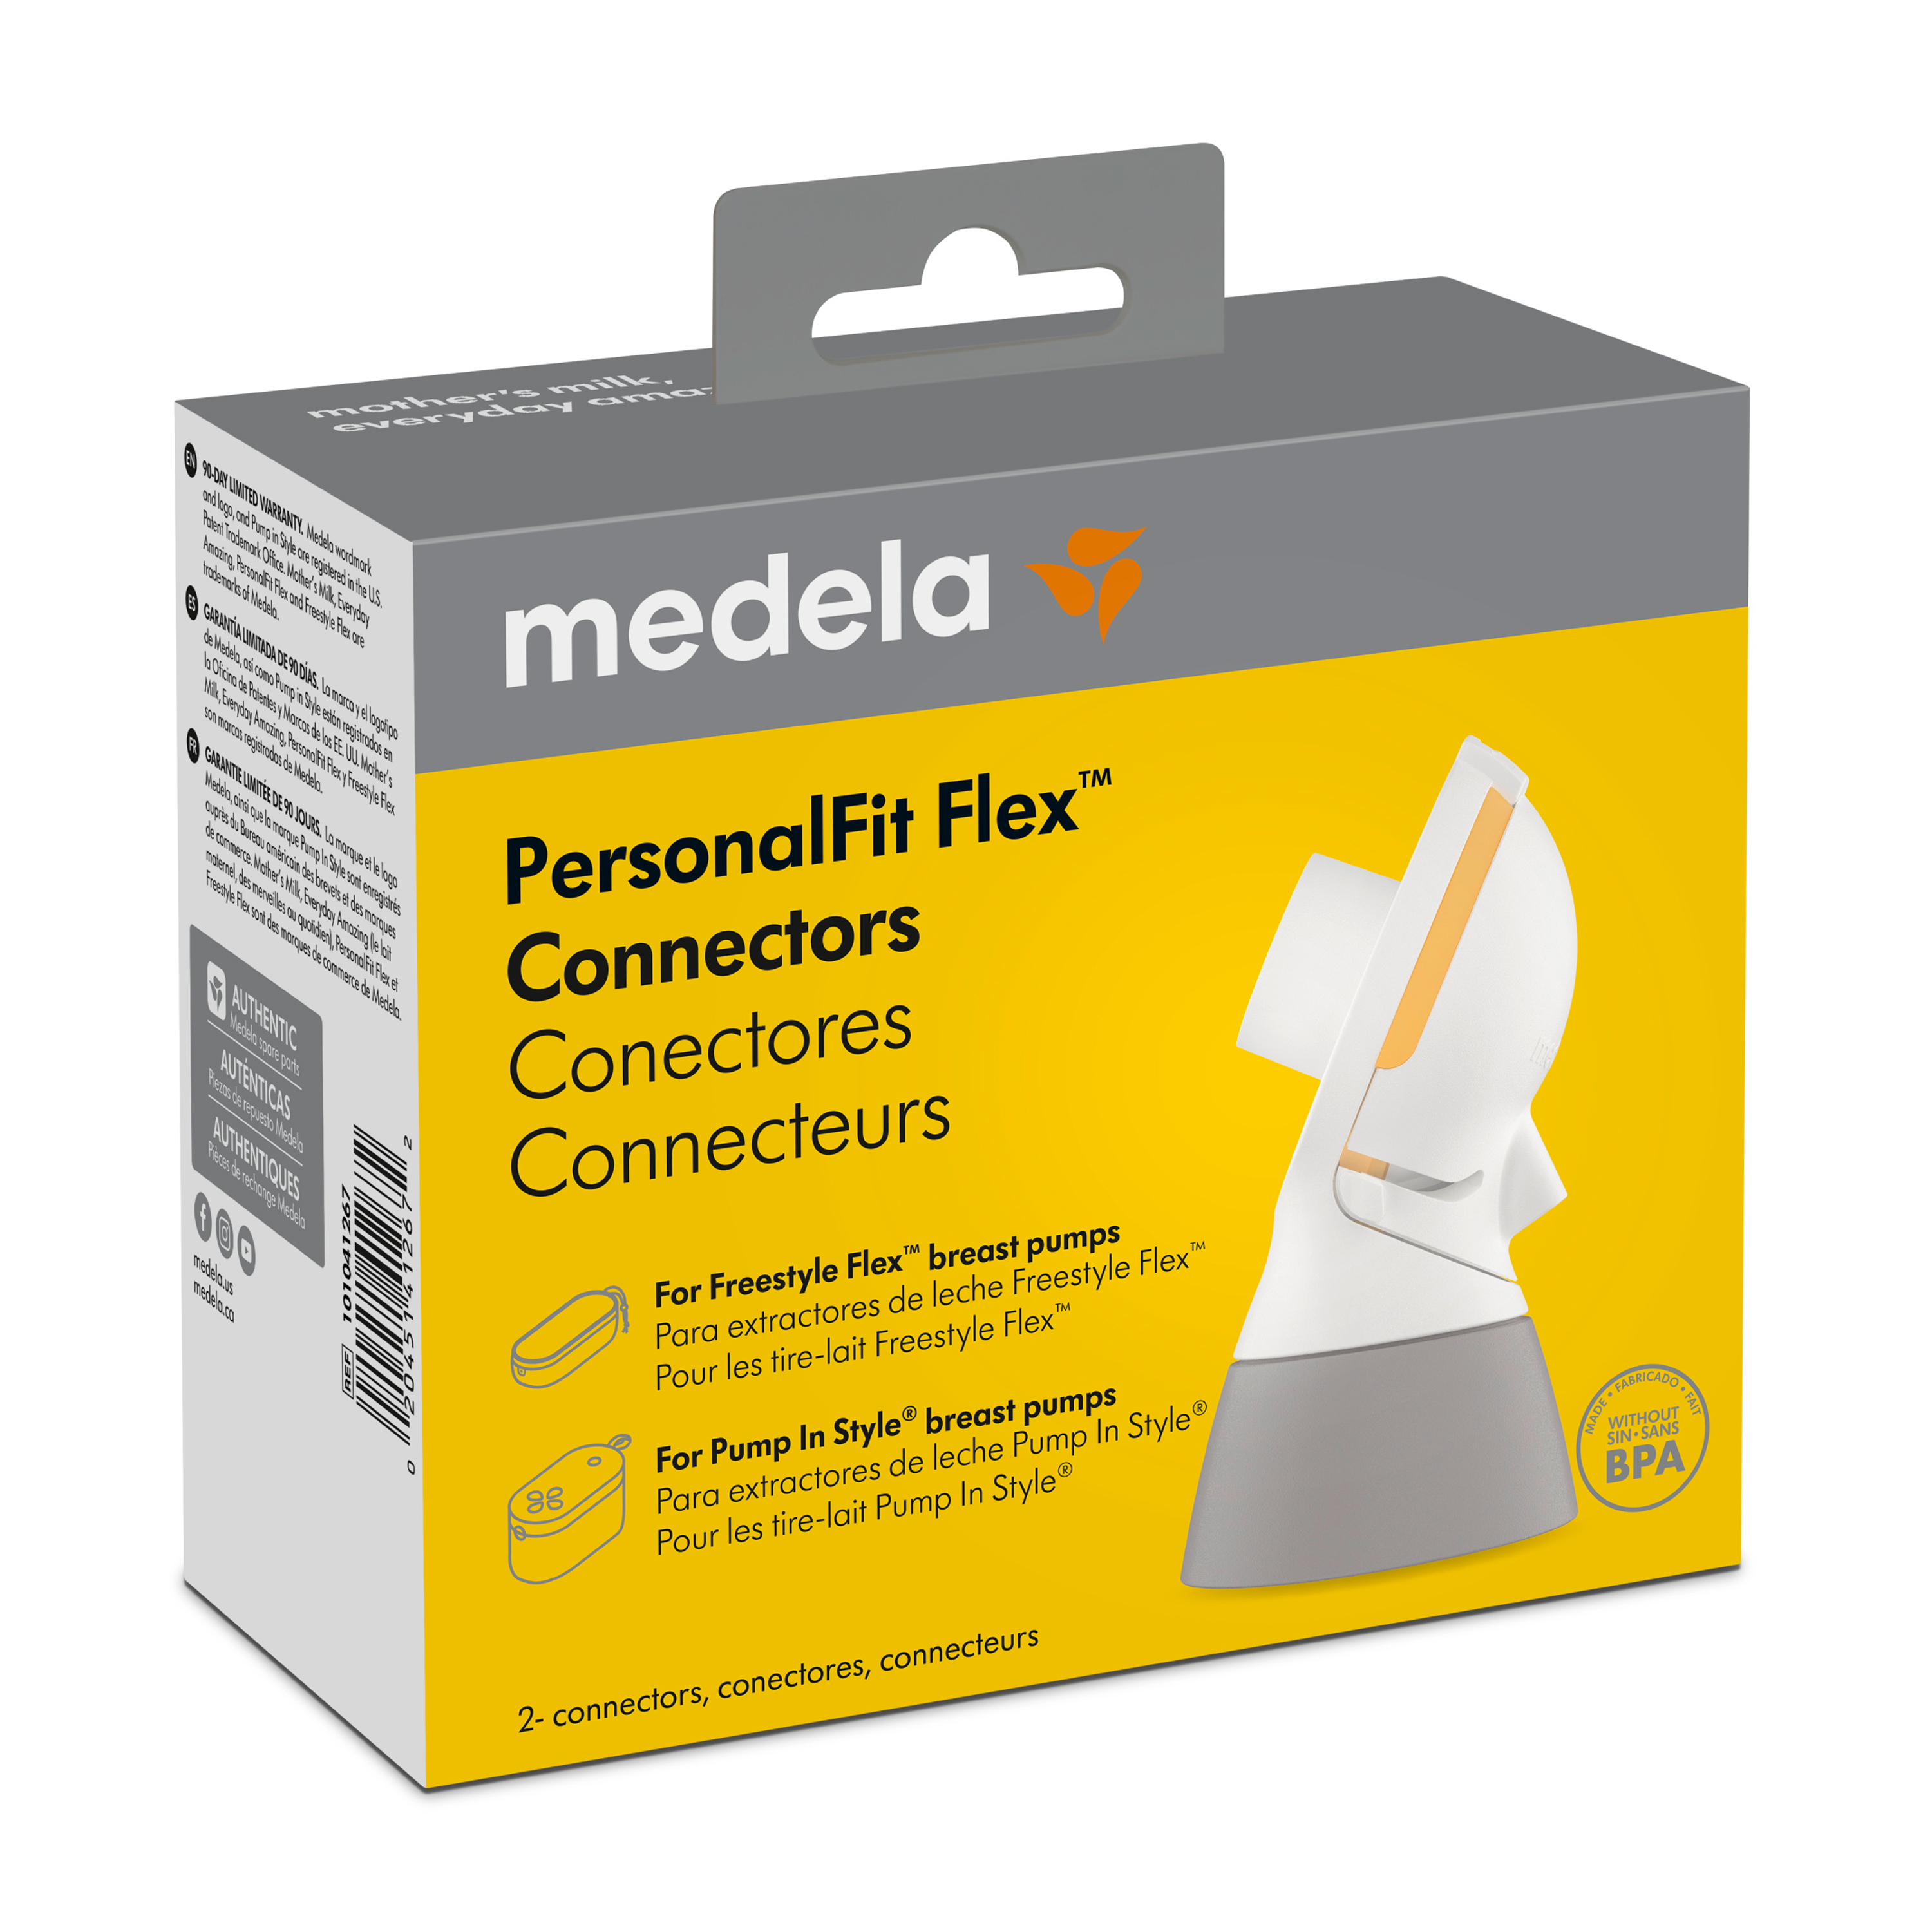 Medela PersonalFit Flex Connectors - 2 Pack - image 5 of 6